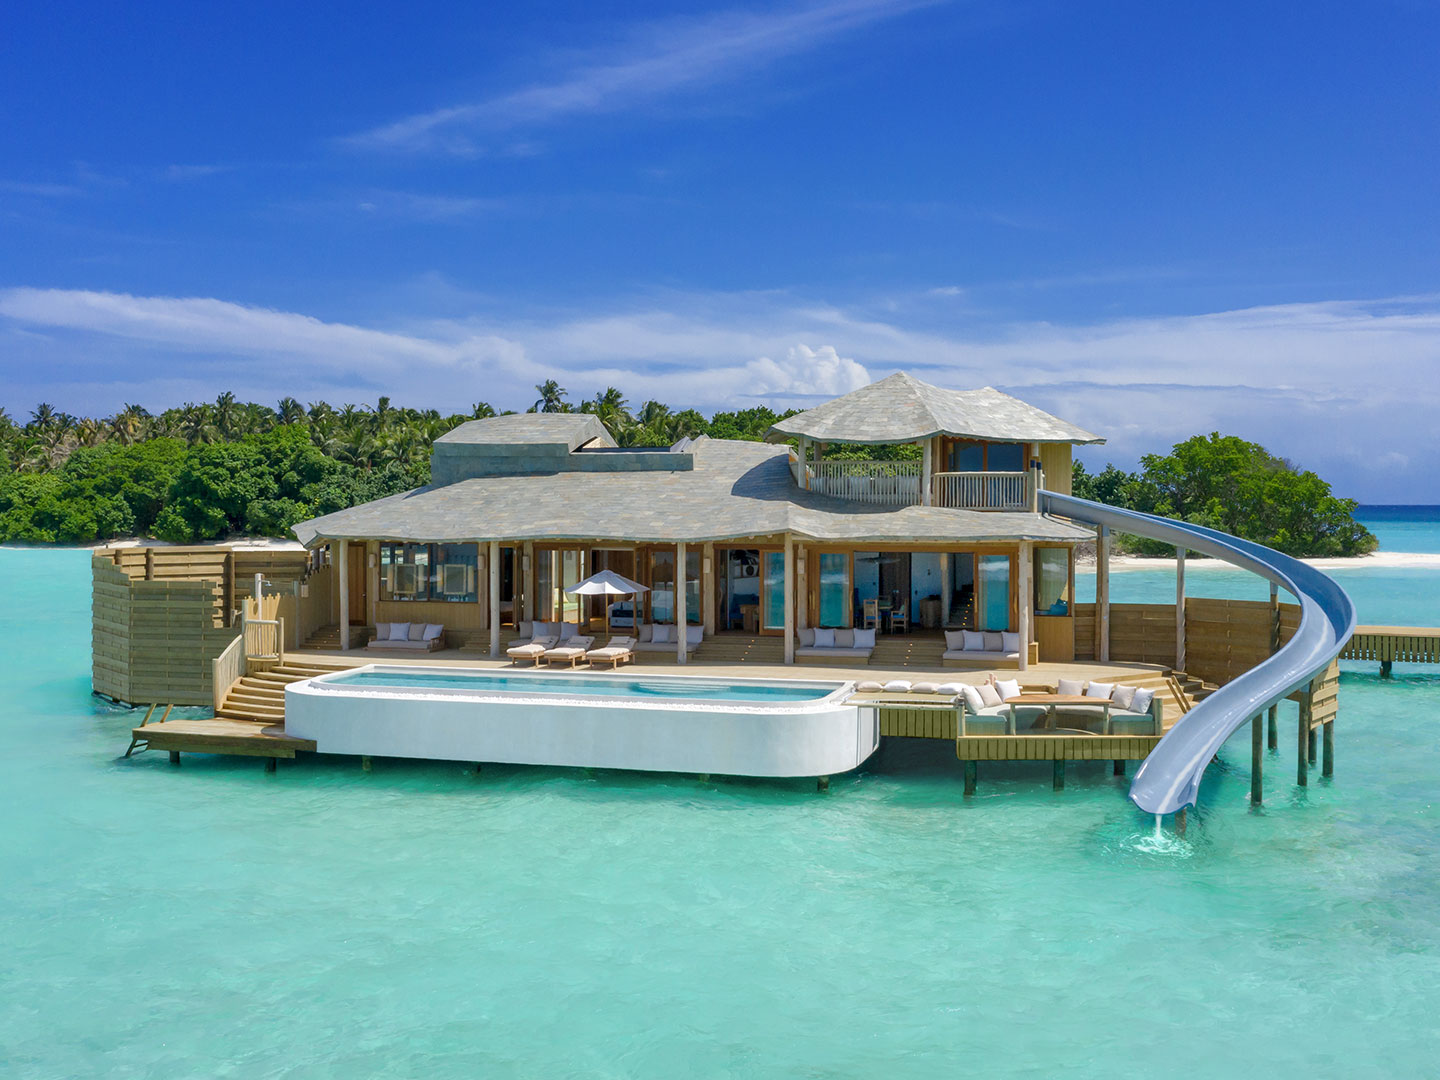 Soneva Fushi new over-water villas in the Maldives